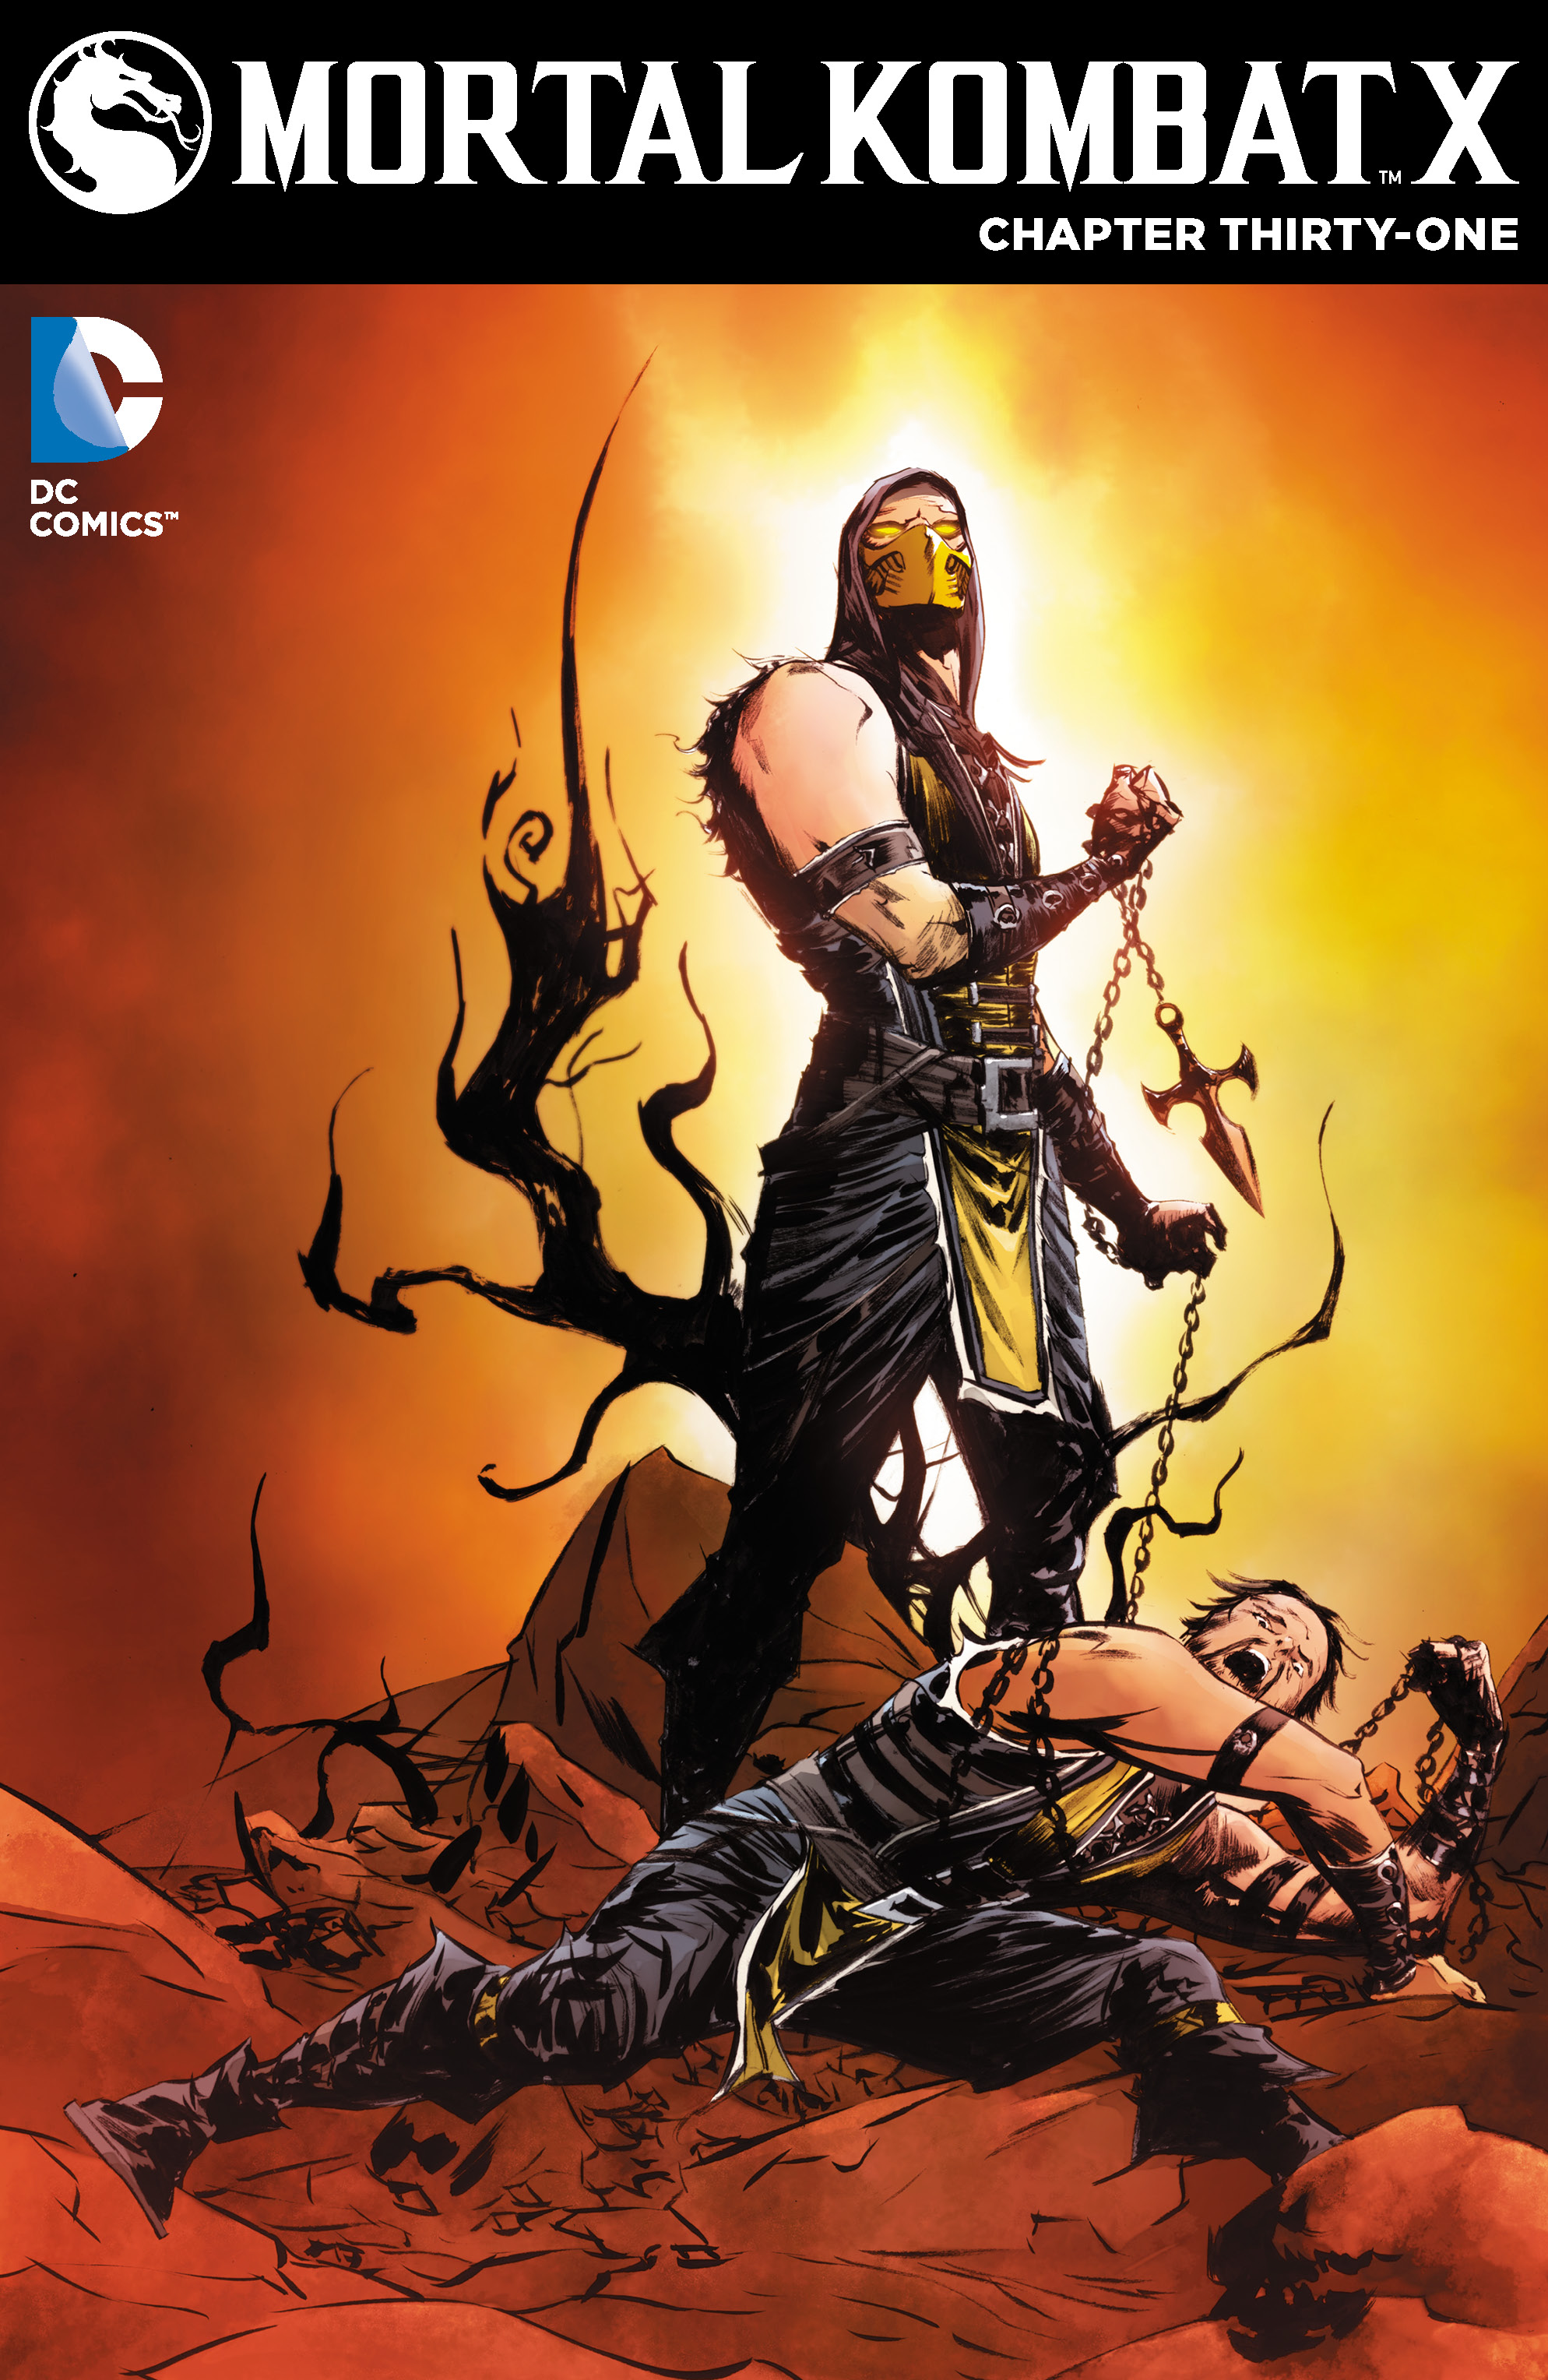 Mortal Kombat X #31 preview images